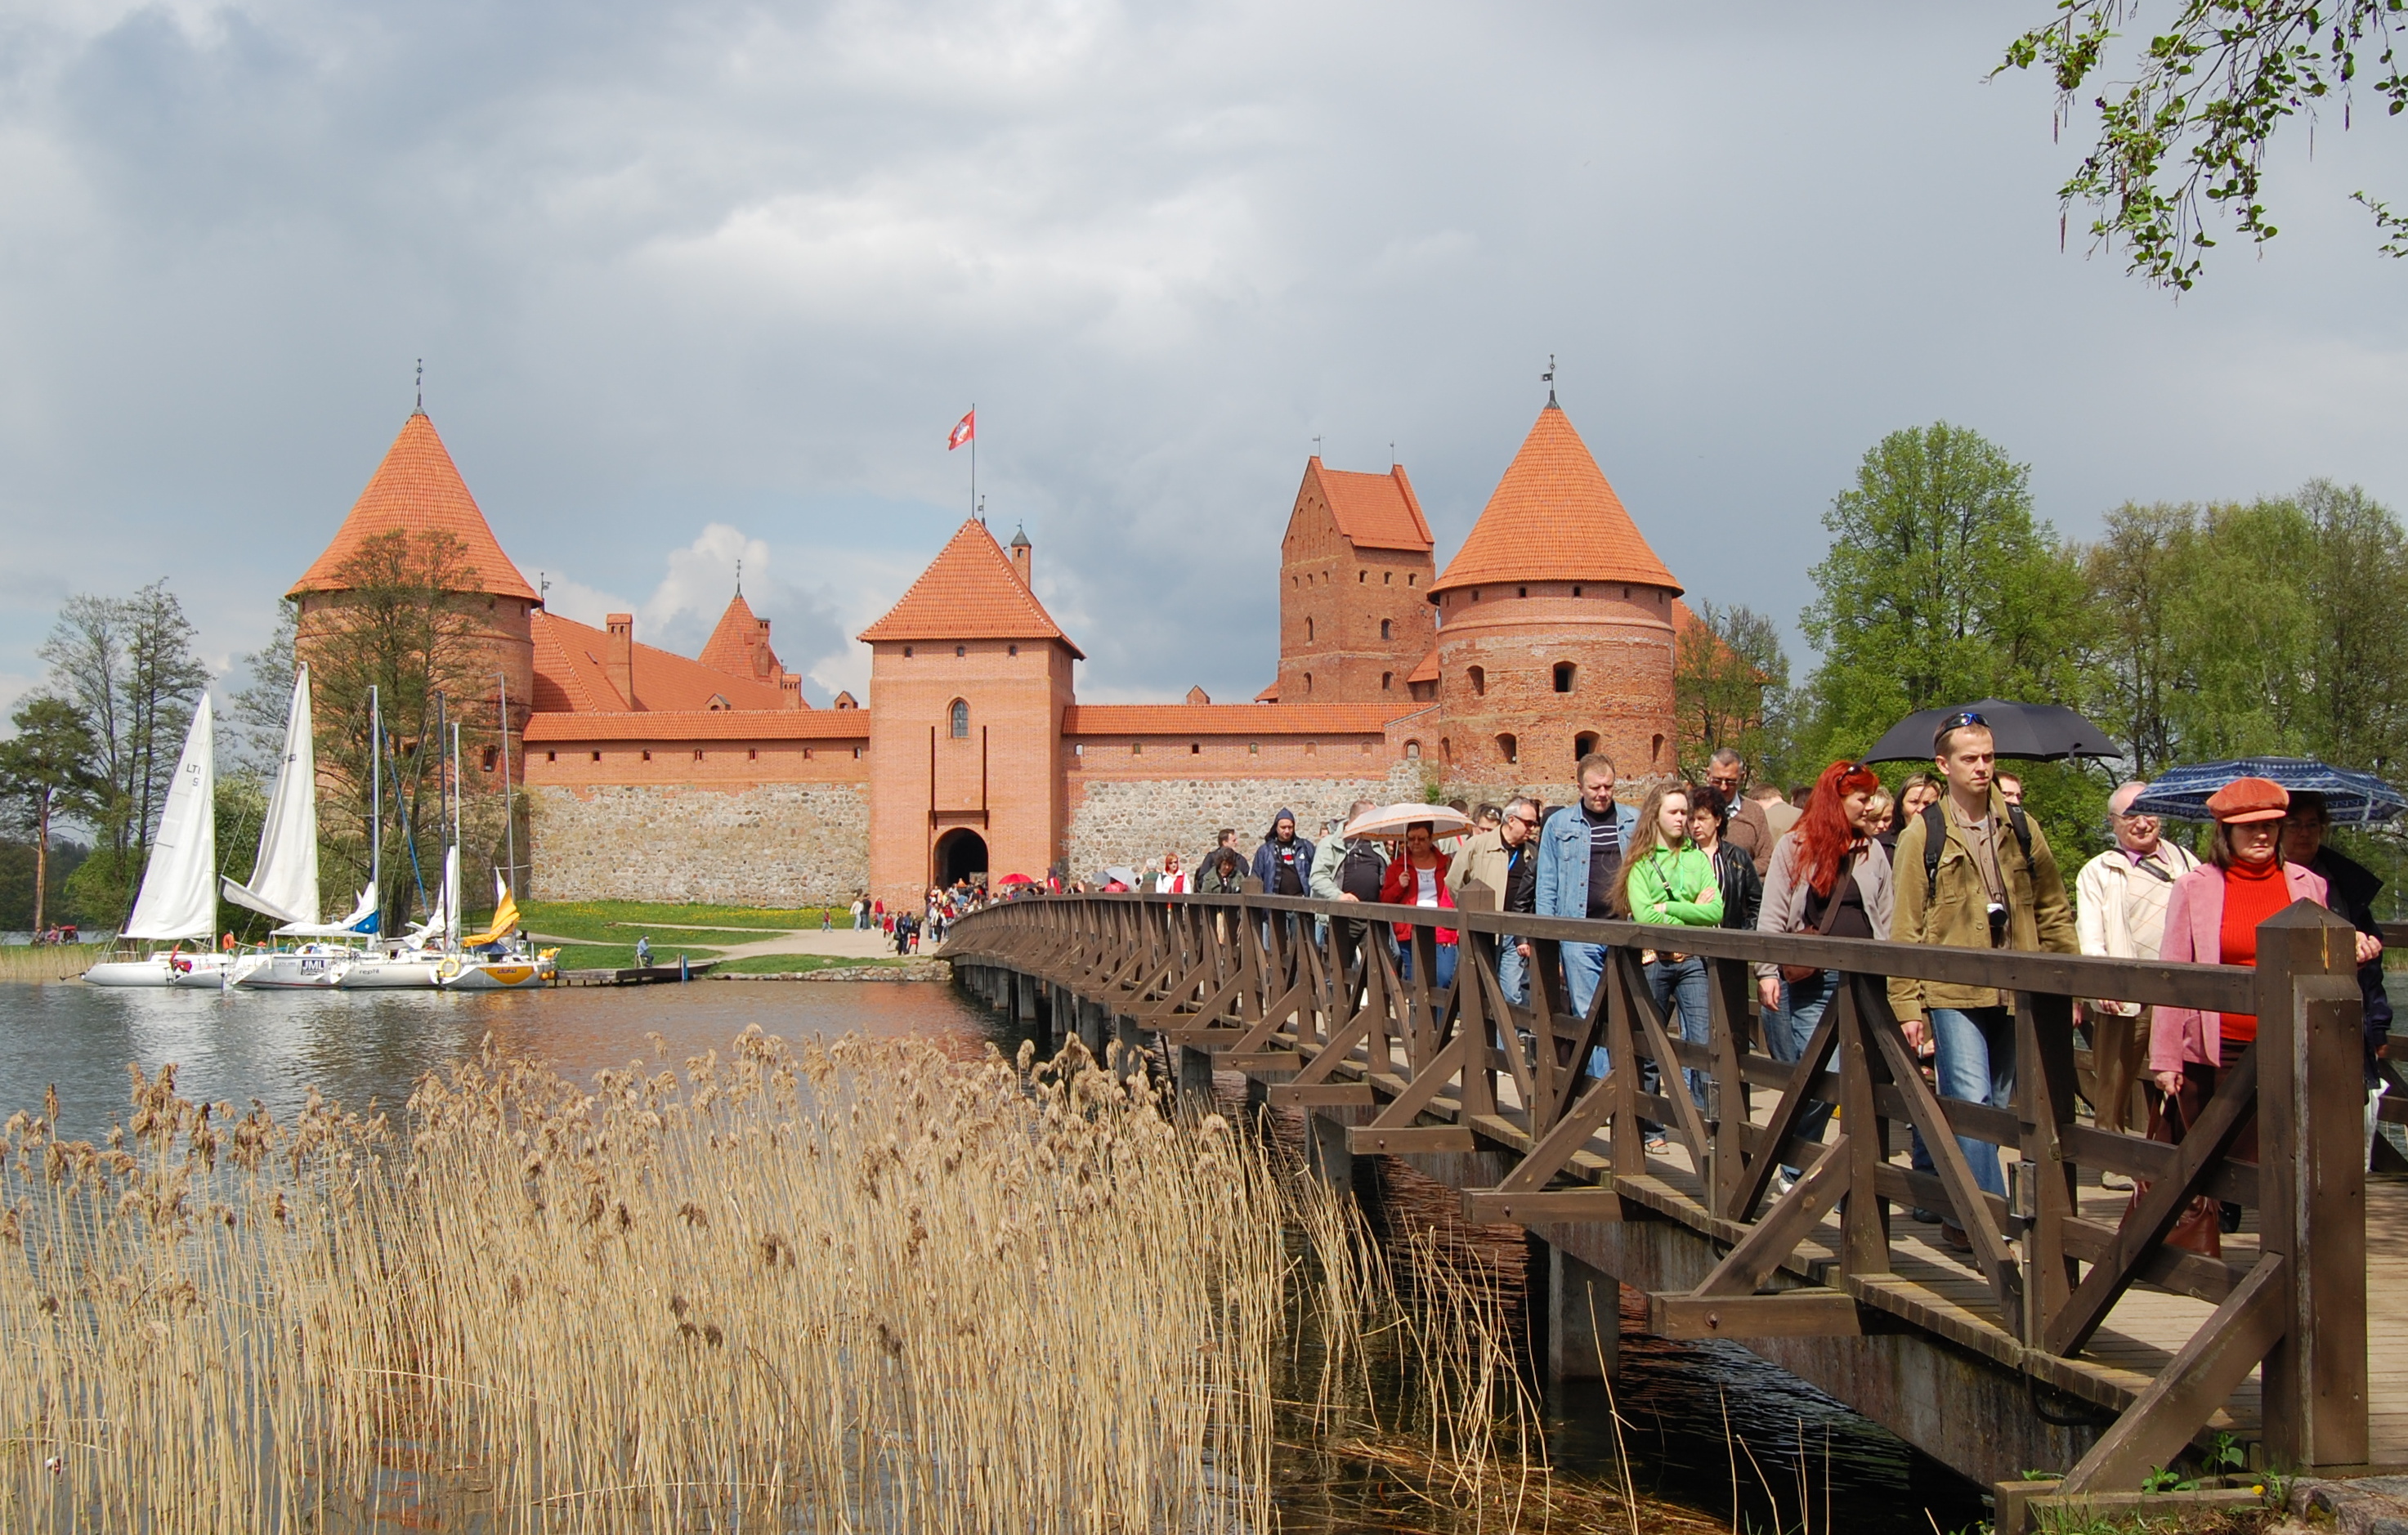 Trakai Castle tourists